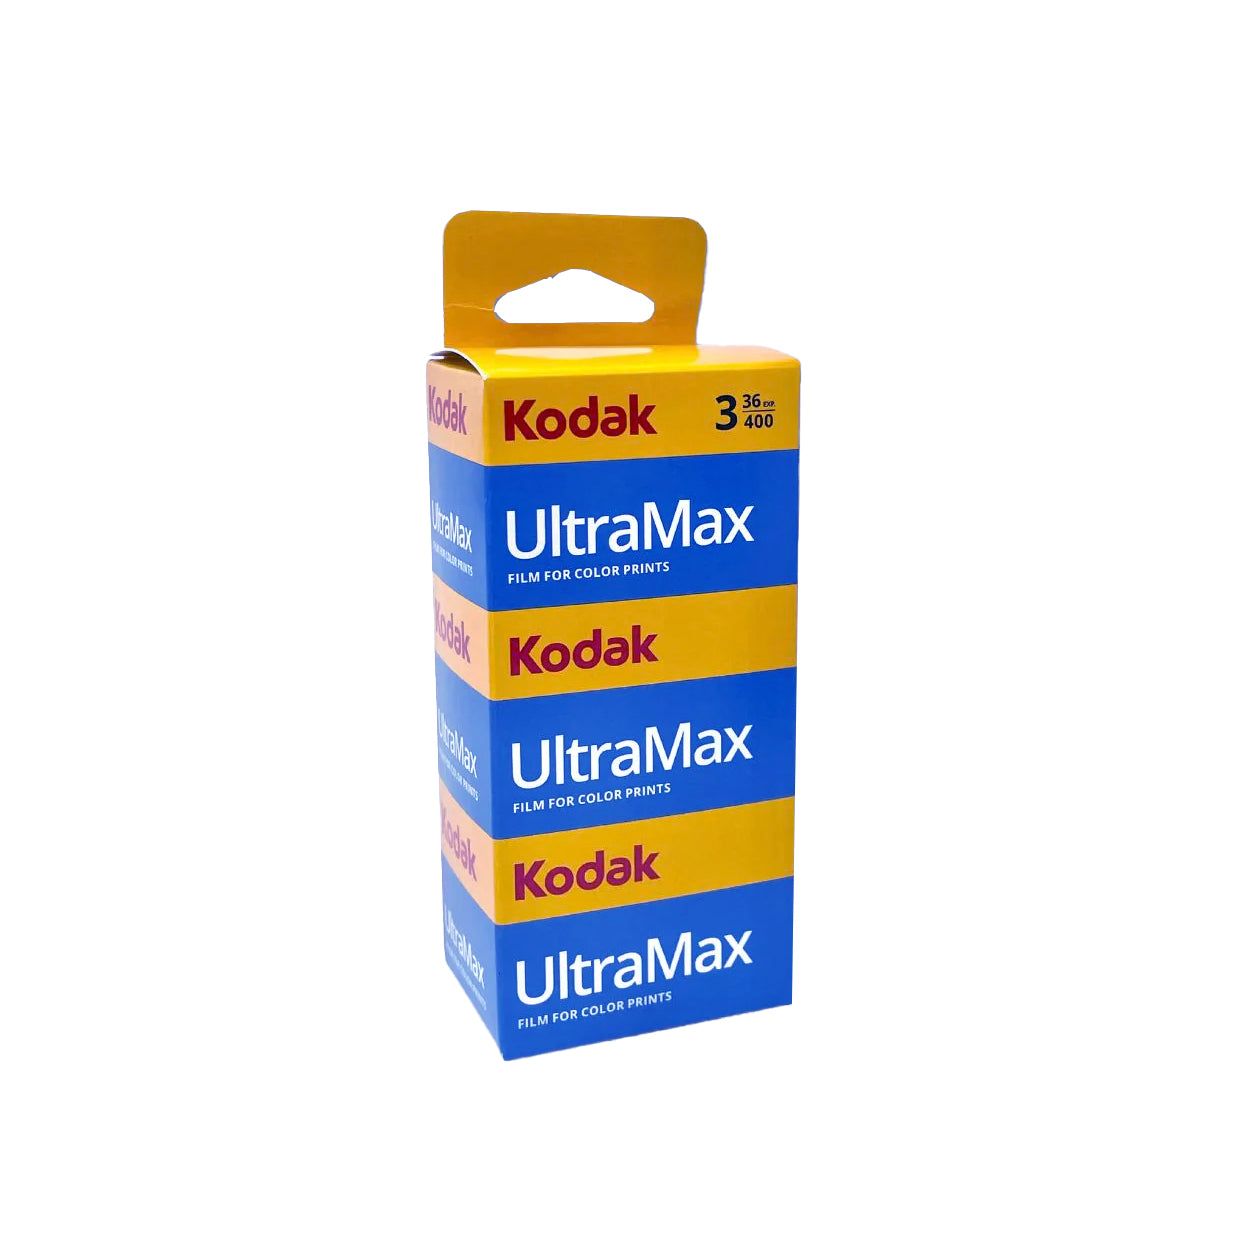 Kodak Ultramax 400 36 exposure (Pack of 3) – dubblefilm